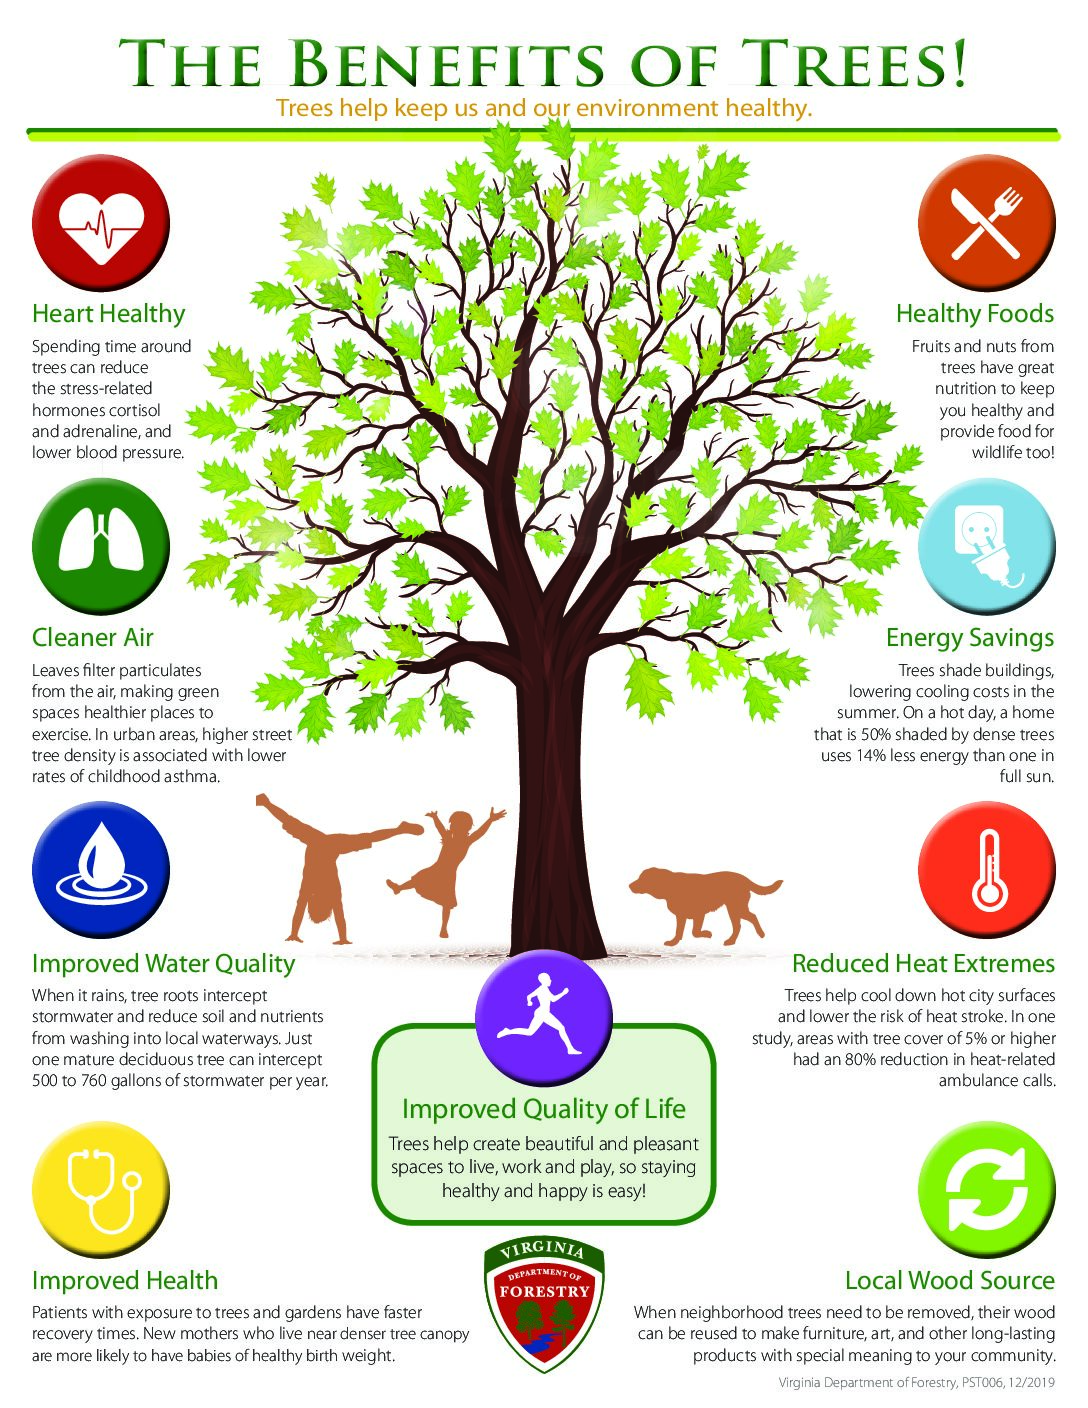 Benefits Of Trees In Communities Virginia Department Of Forestry